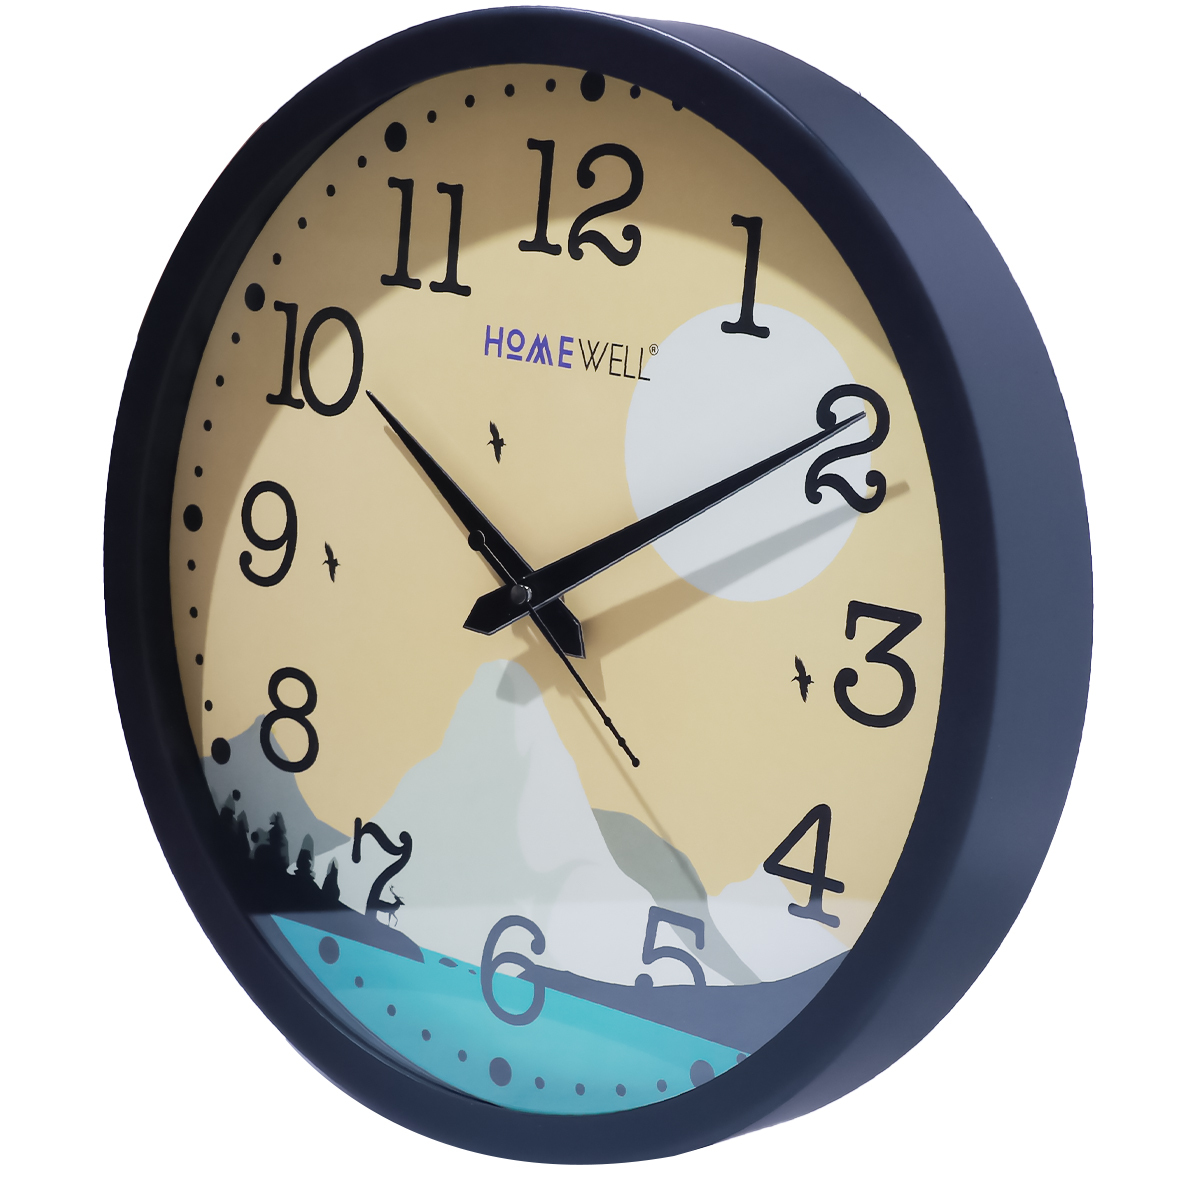 Homewell Wall Clock